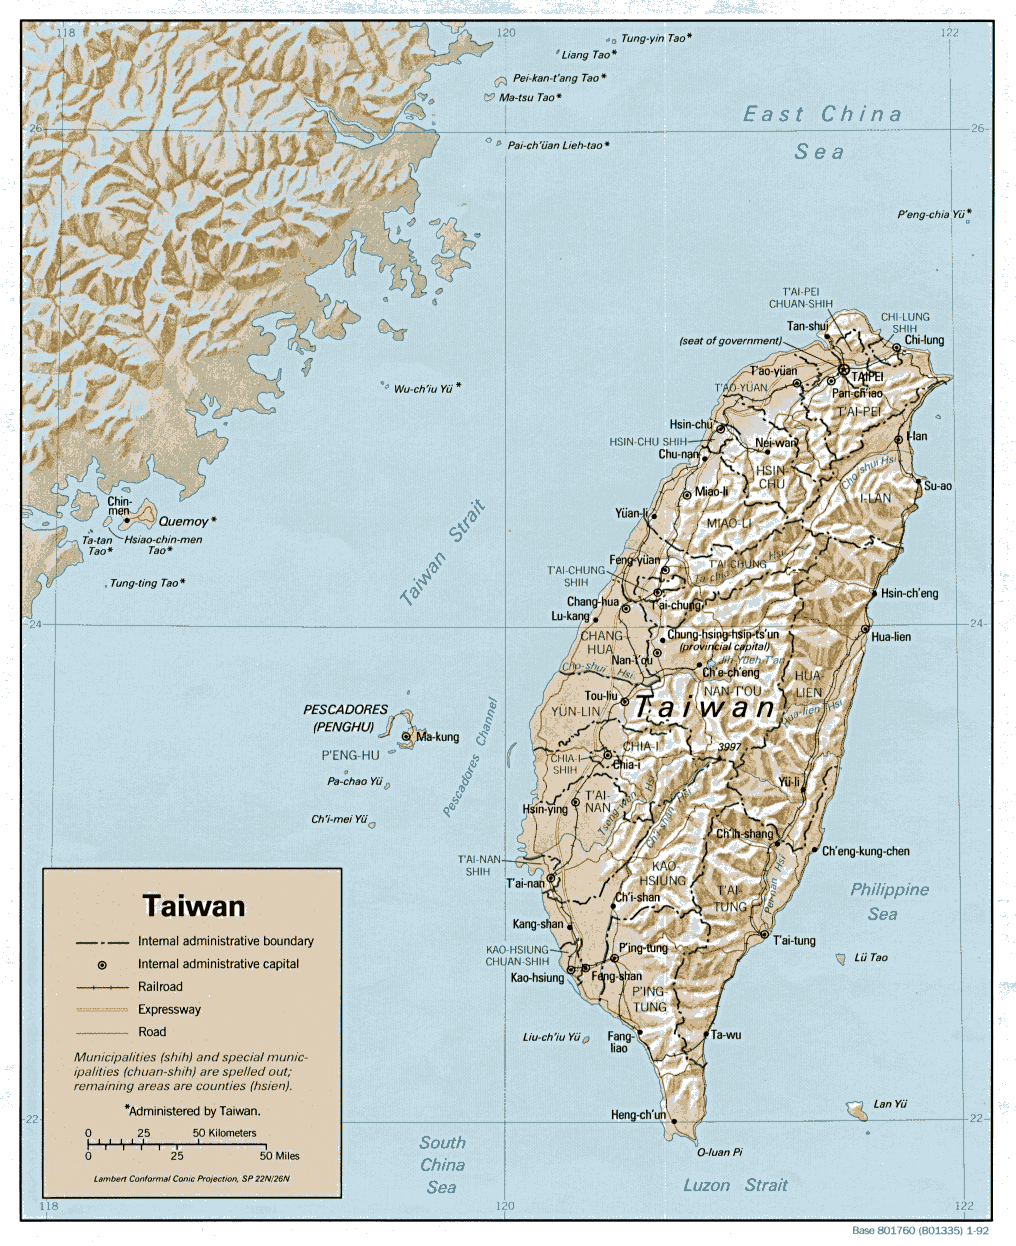 TAIWAN - GEOGRAPHICAL MAPS OF TAIWAN